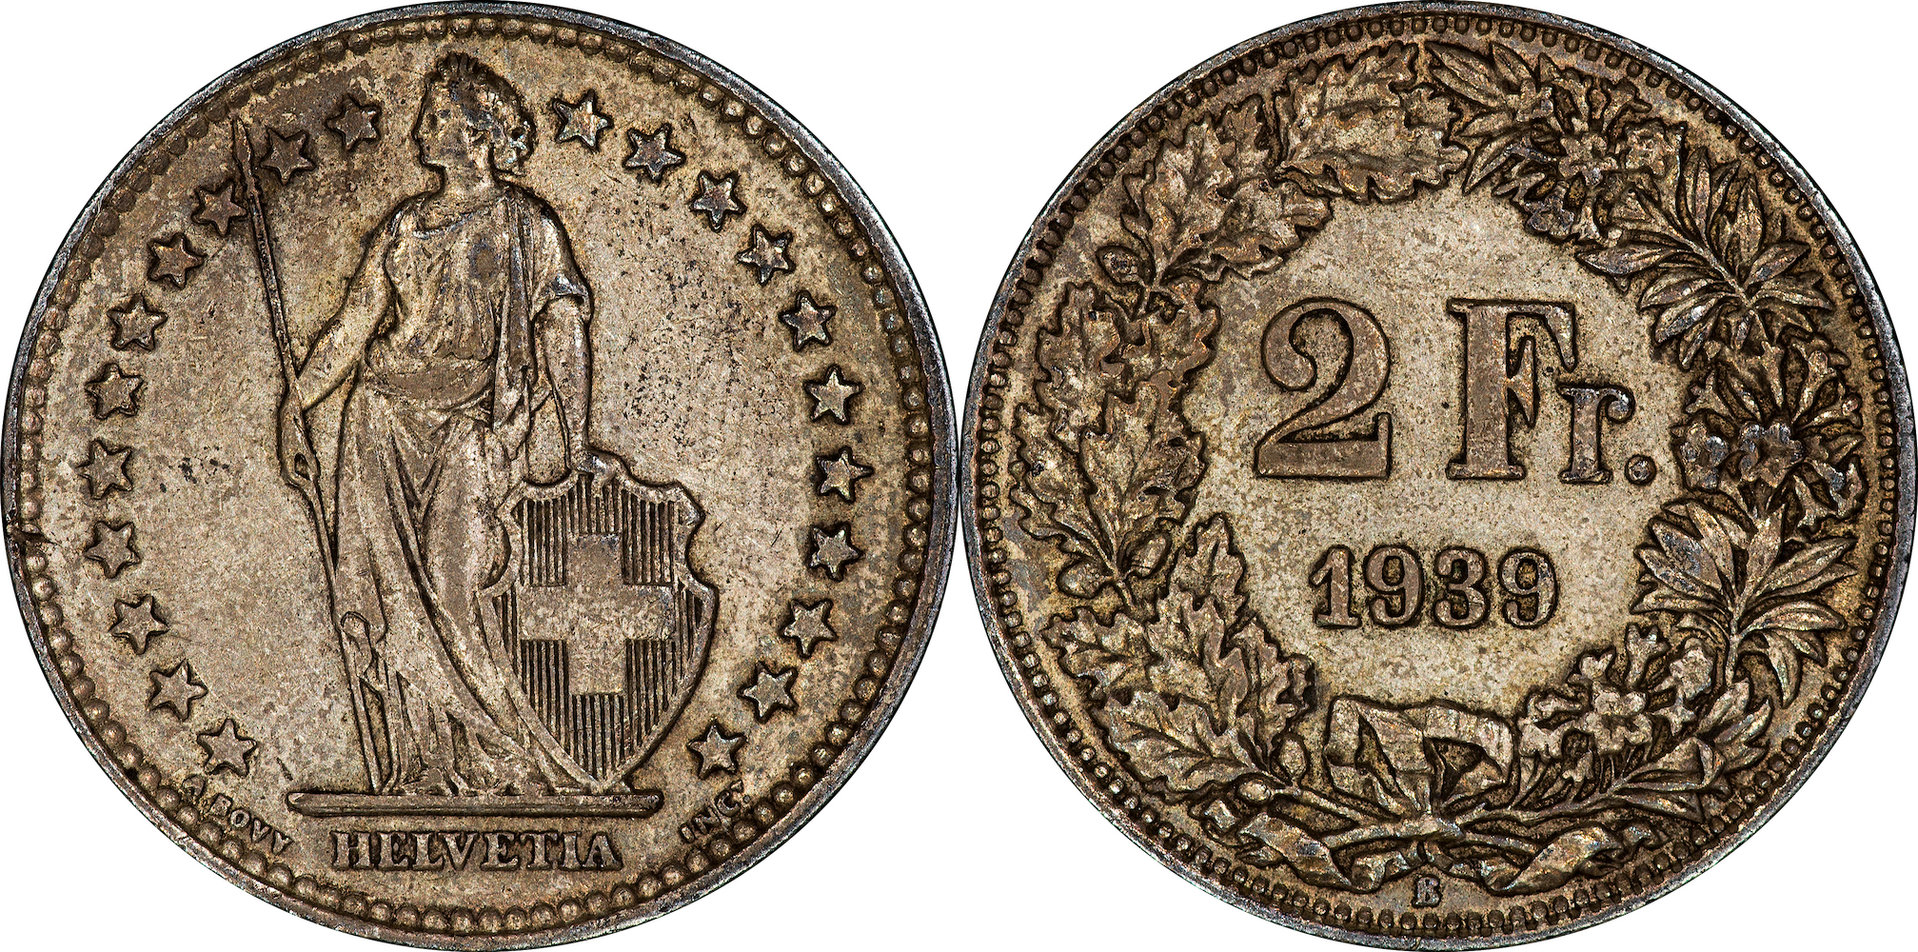 Switzerland - 1939 B 2 Francs.jpg